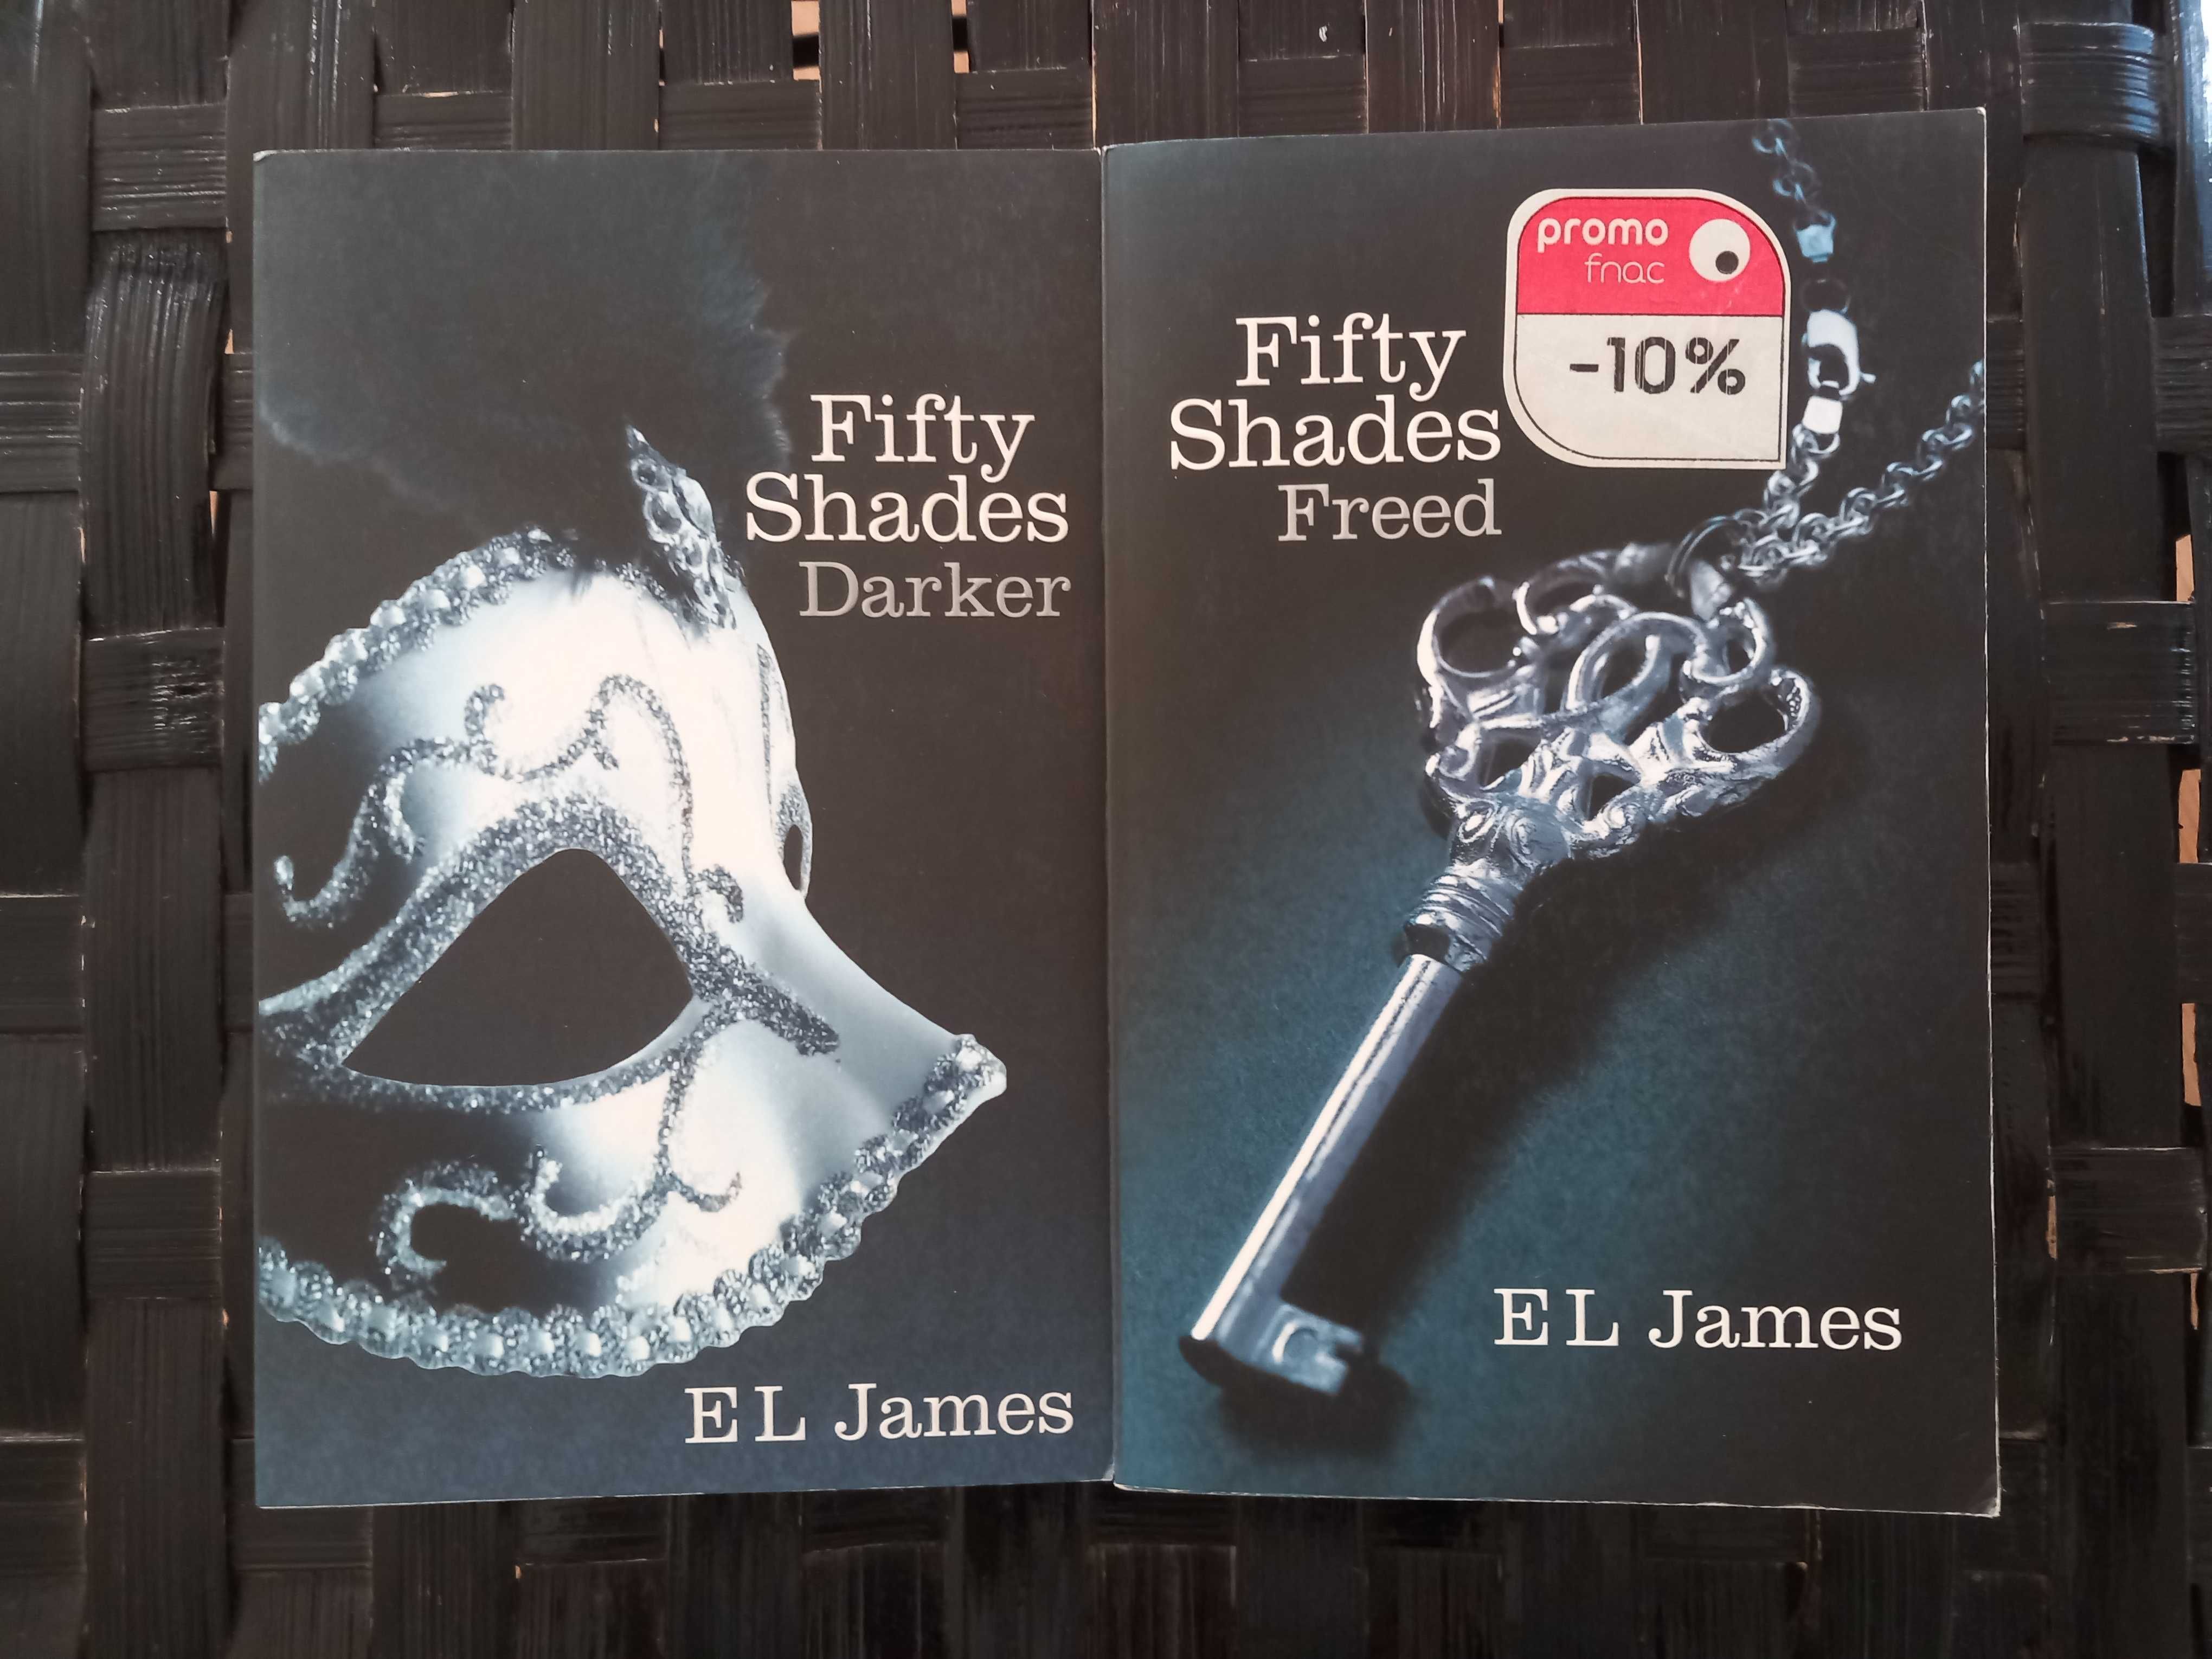 Fitfy Shades Darker + Fifty Shades Freed E.L. James _ nunca lidos